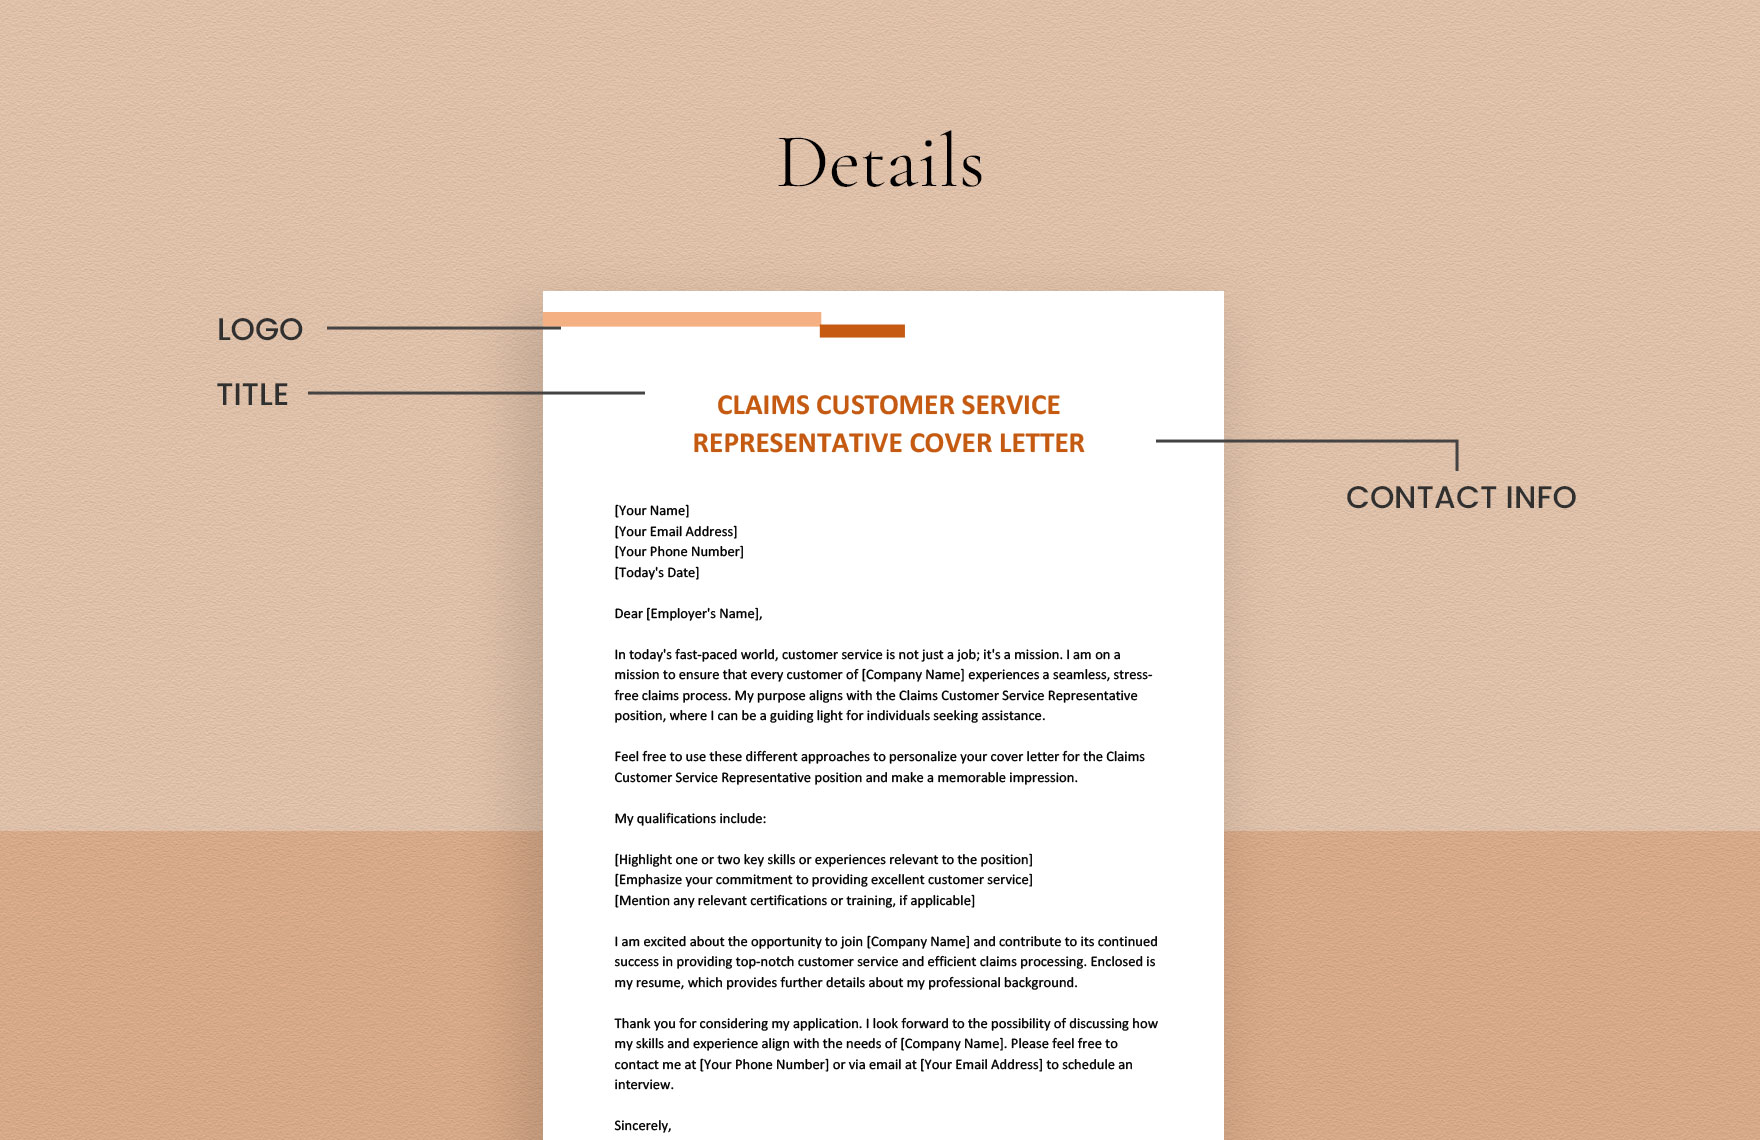 Claims Customer Service Representative Cover Letter